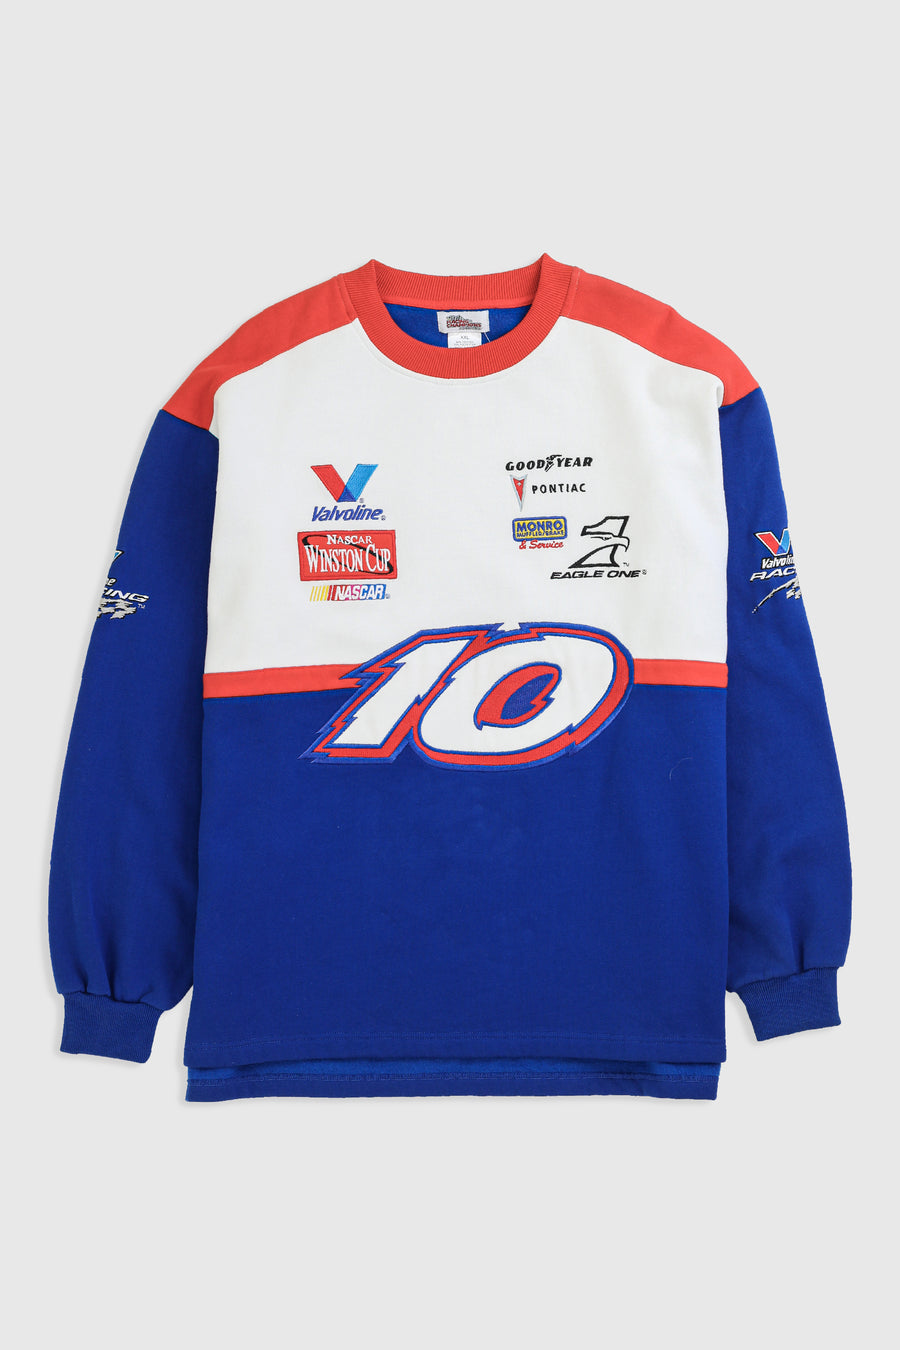 Vintage Racing Sweatshirt